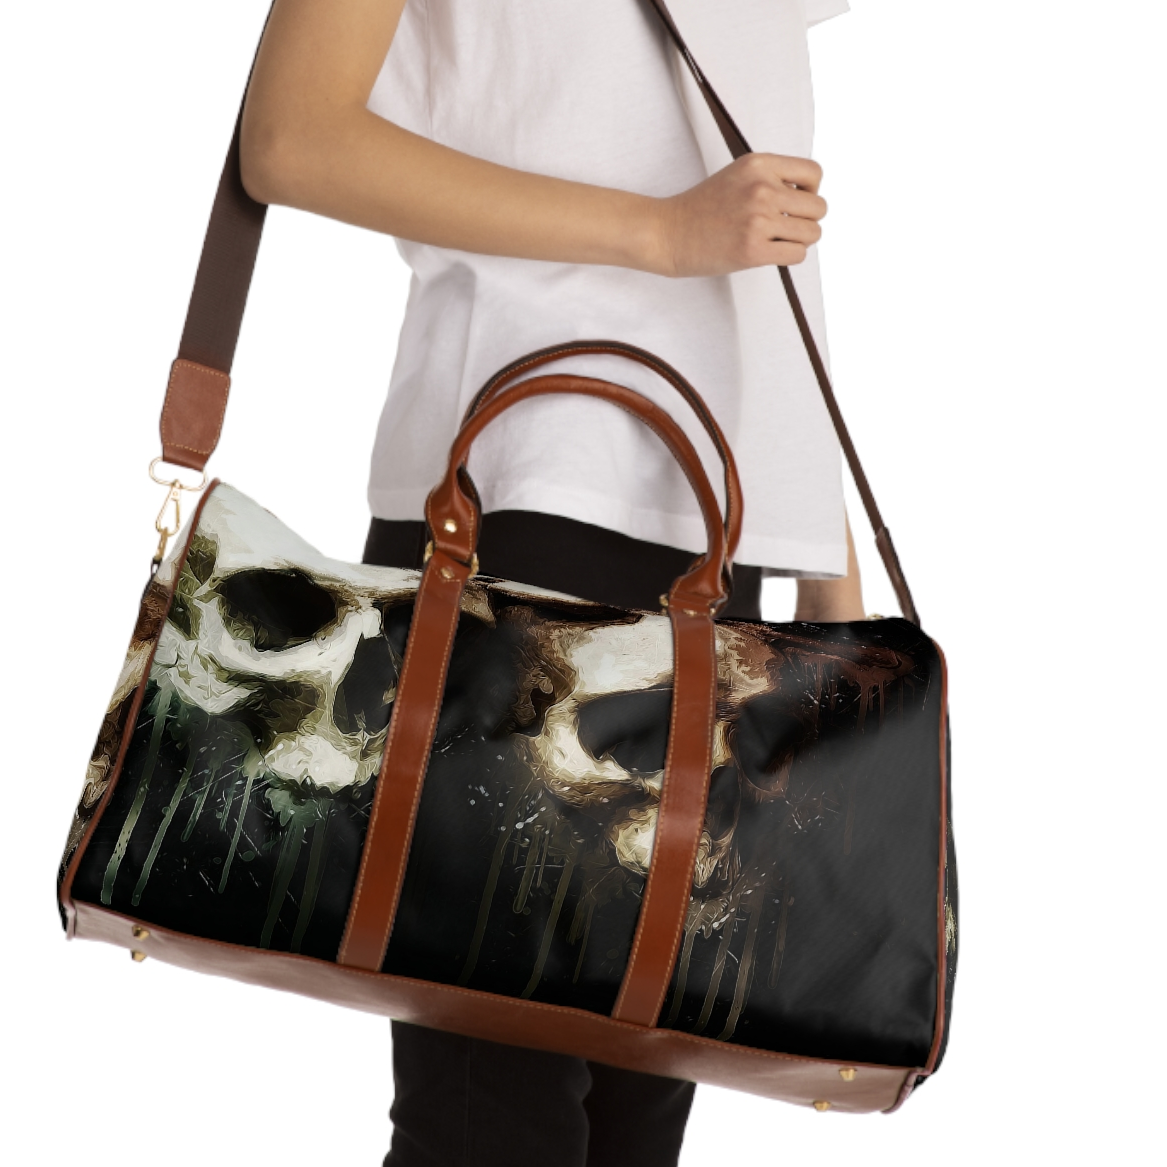 ThatXpression Fashion Elegance Collection E13 Designer Duffle bag